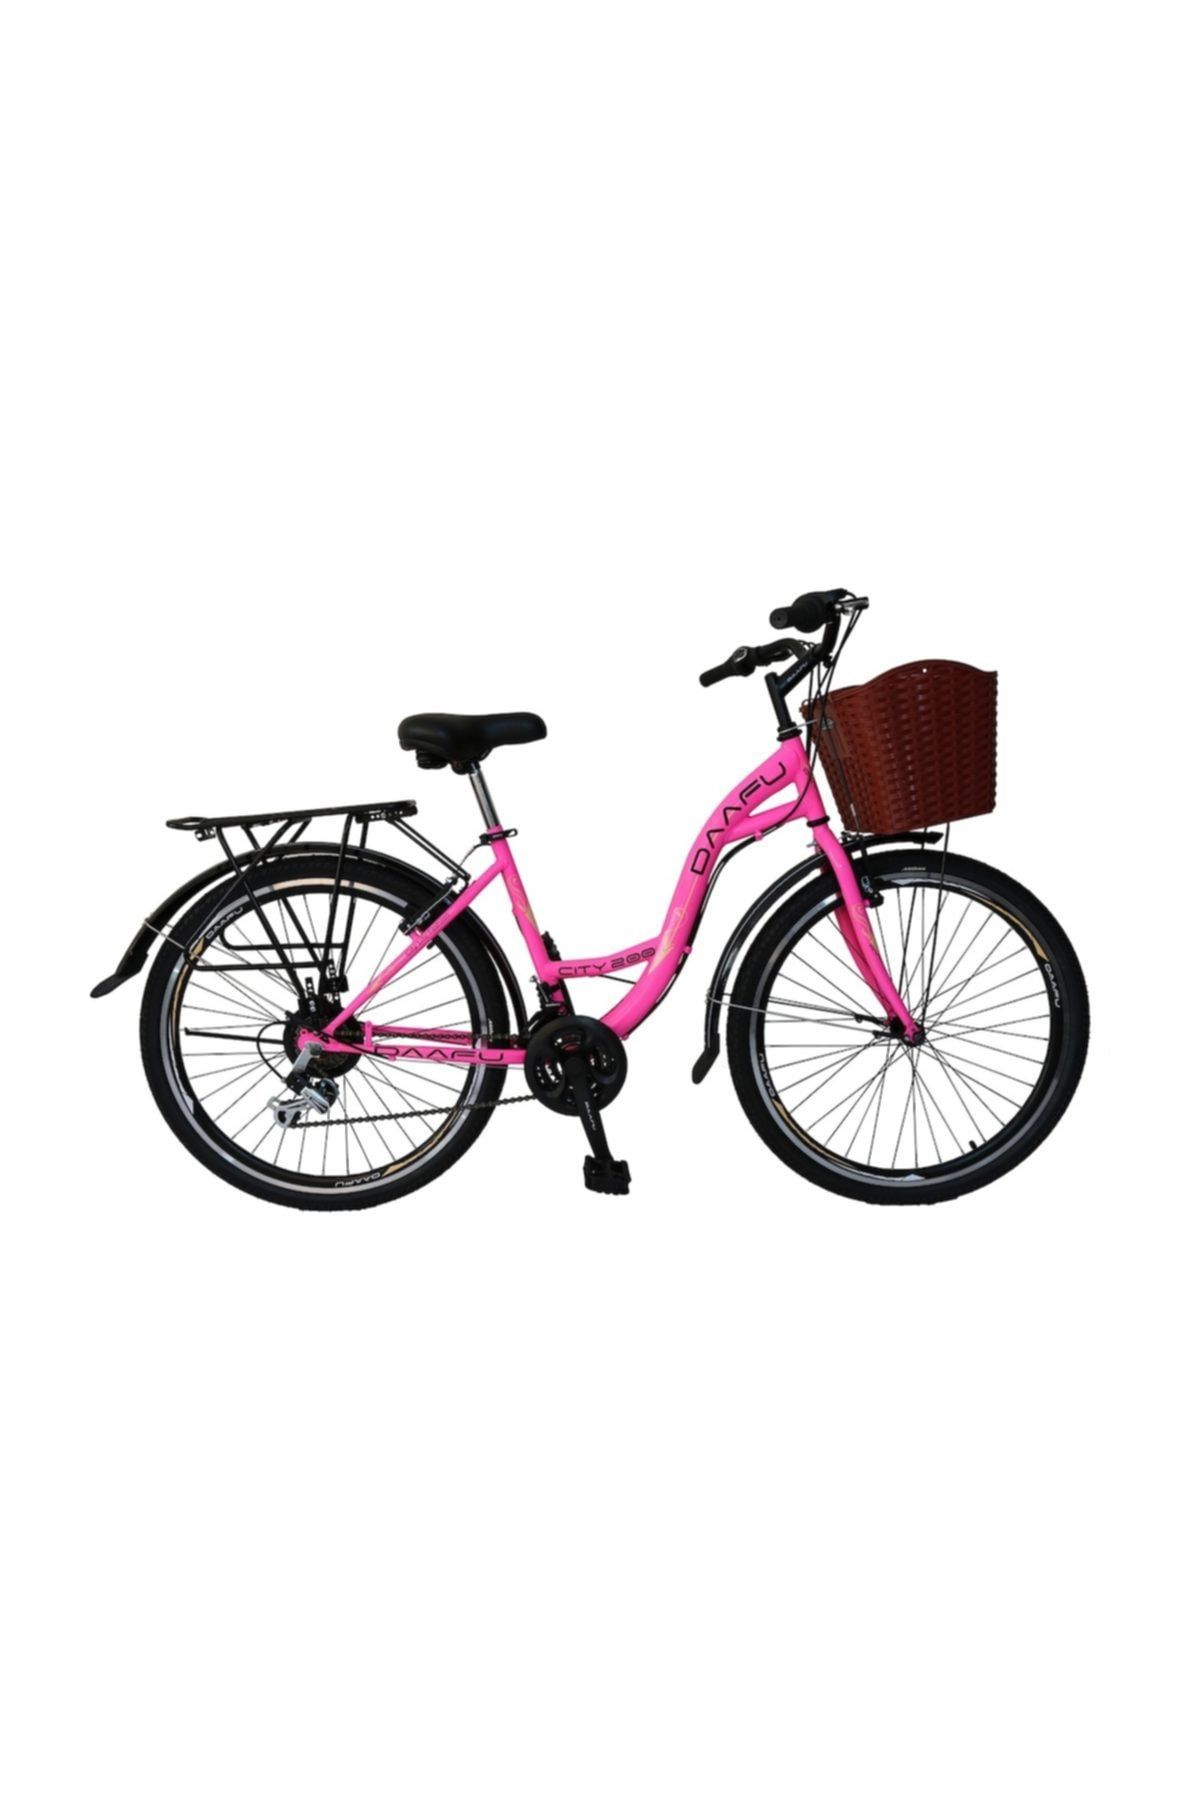 Arbike Daafu City 200 26 Jant Bisiklet 21 Vites Kadın Bisikleti